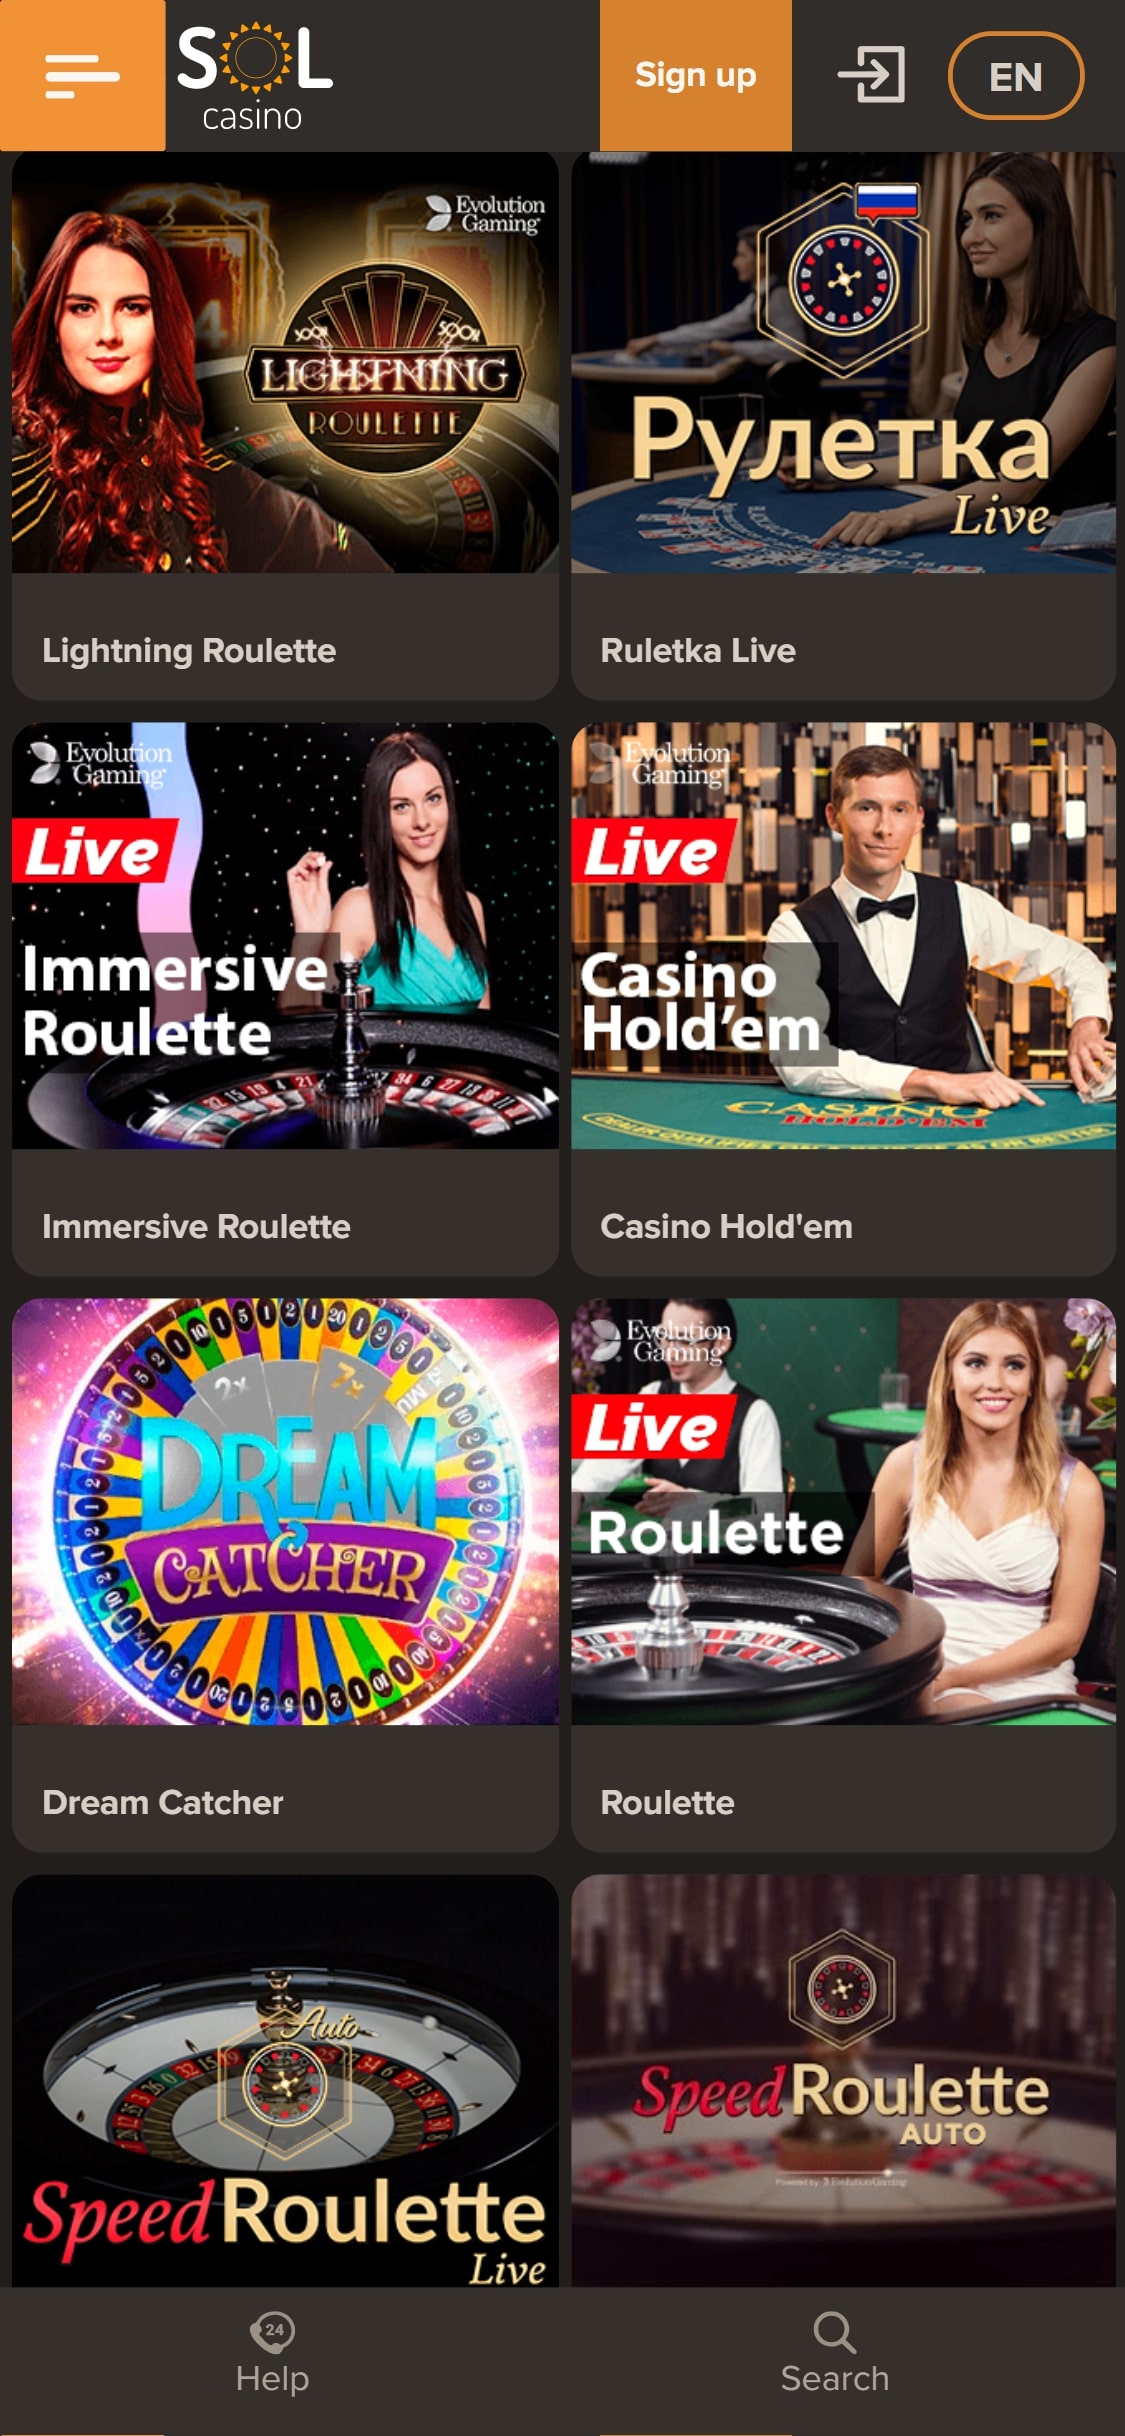 SOL Casino Mobile Live Dealer Games Review